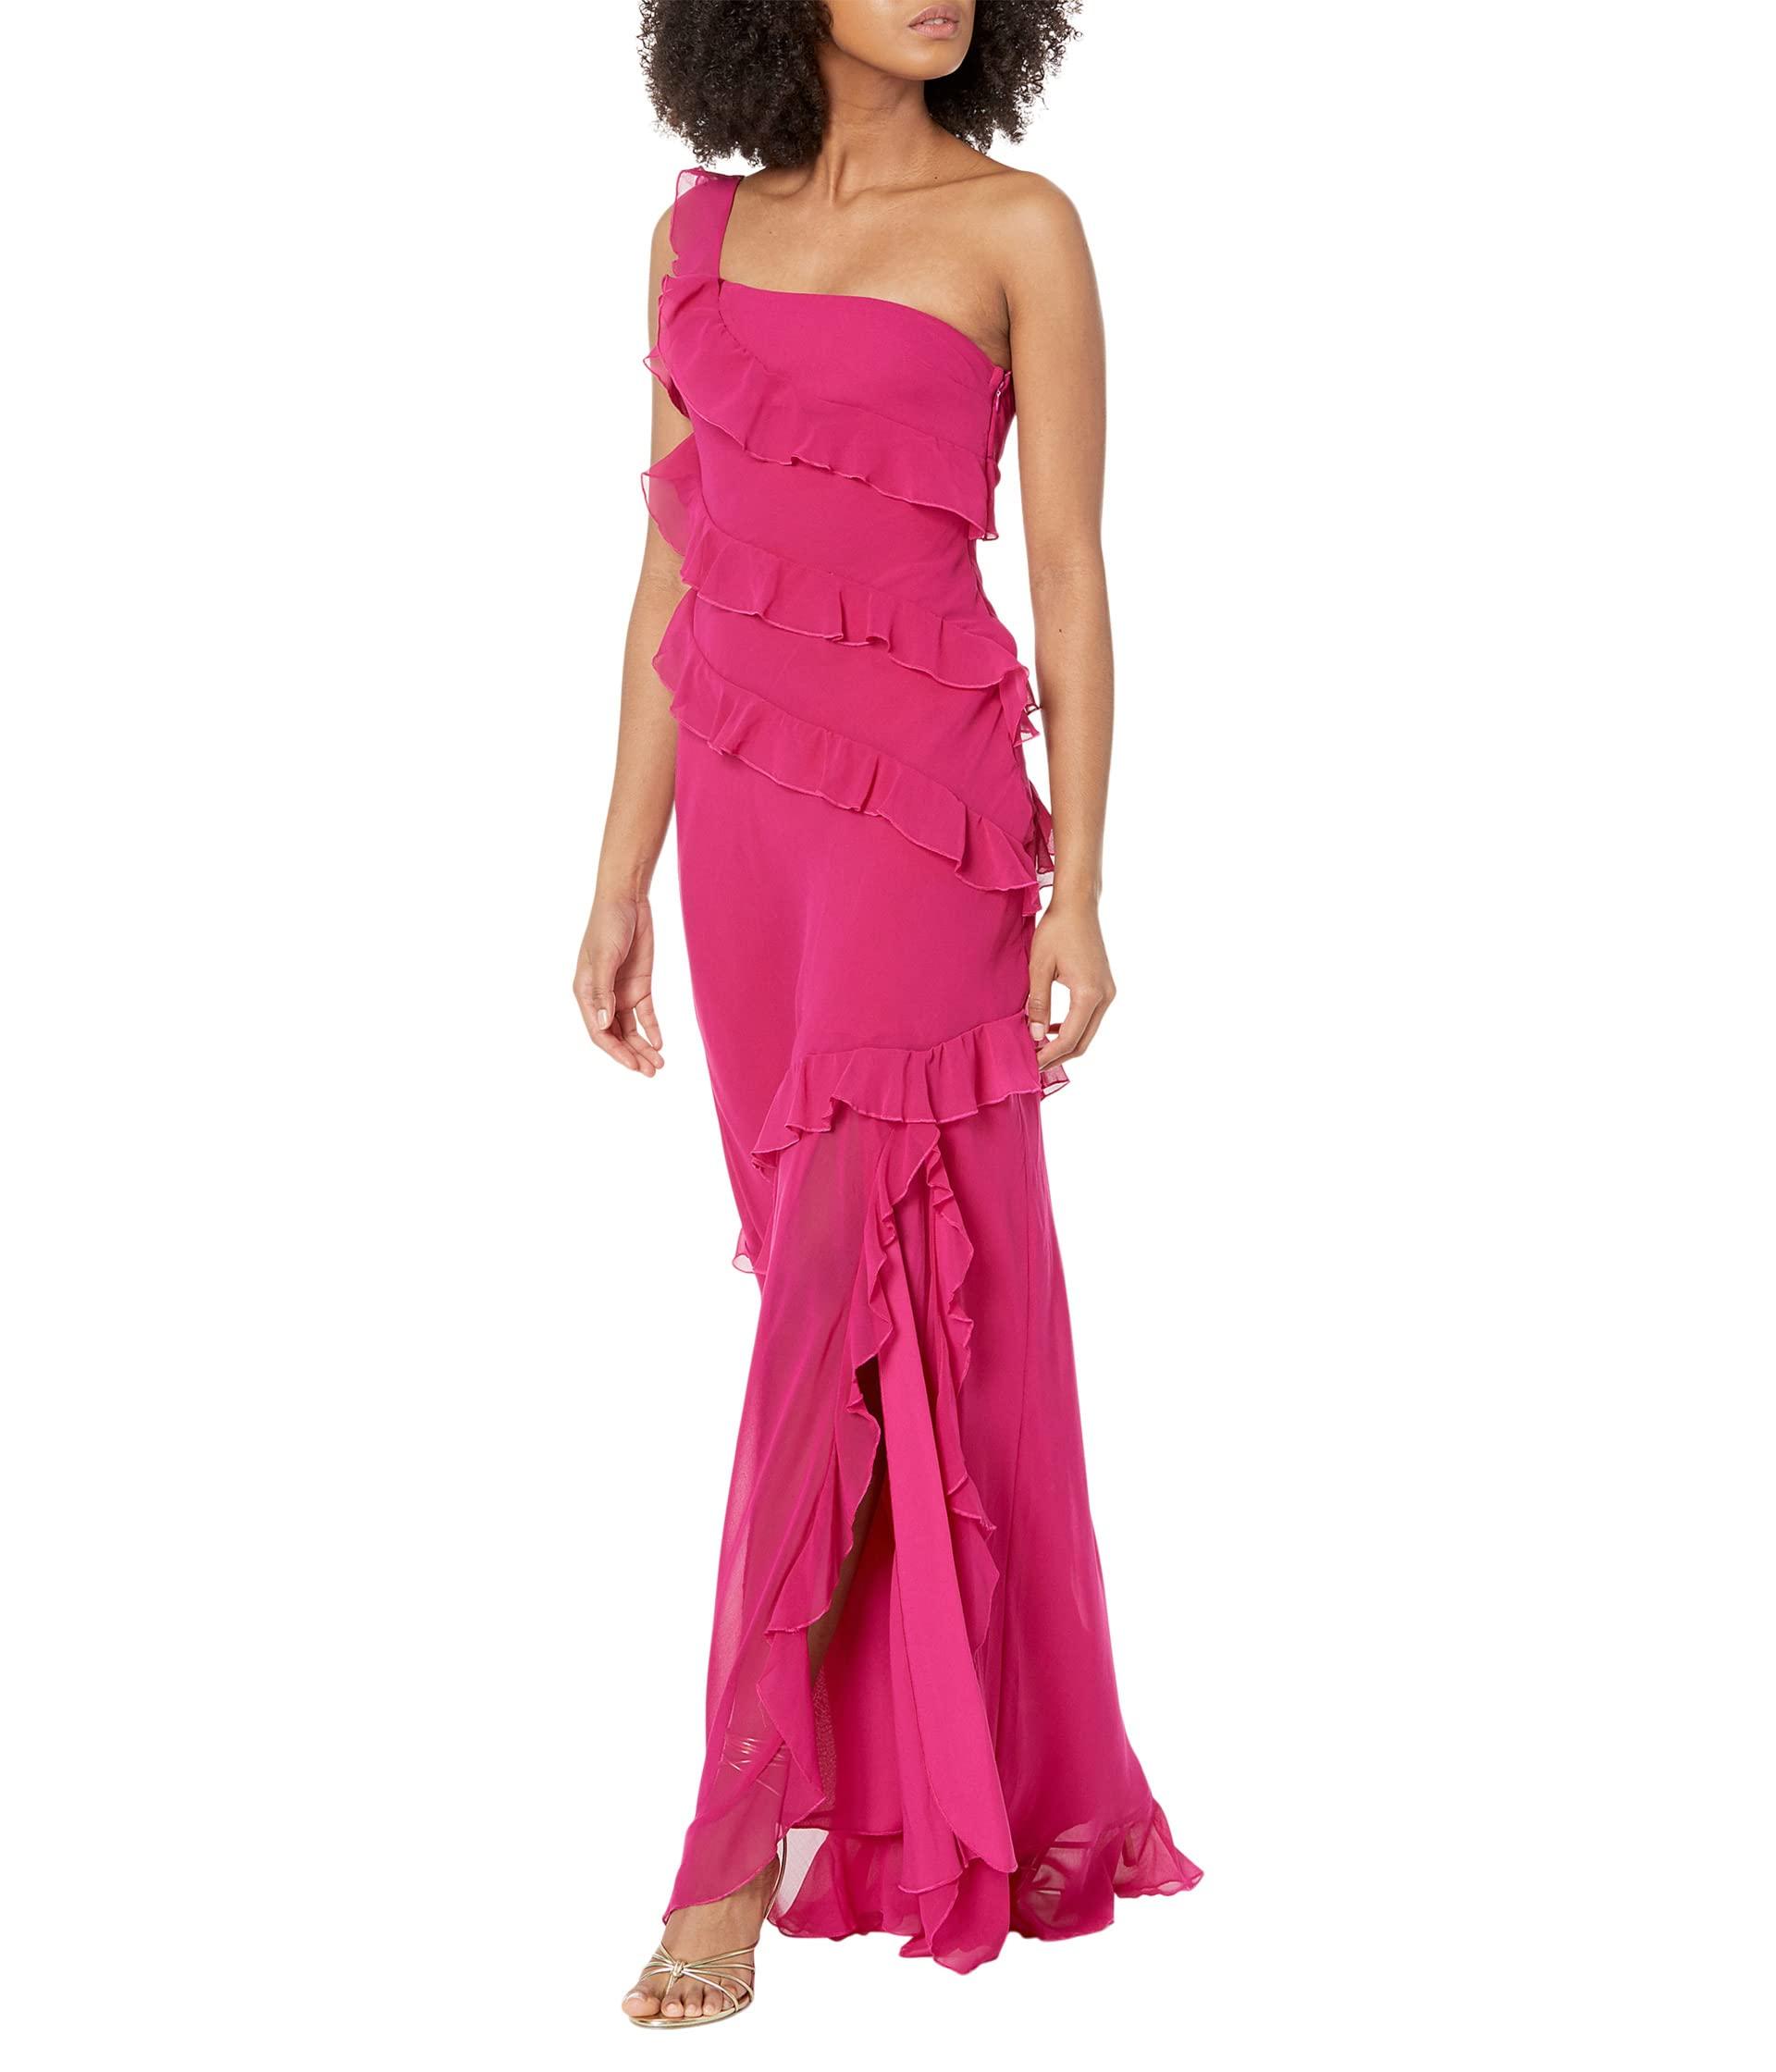 Mango Savannah Dress in Pink | Lyst